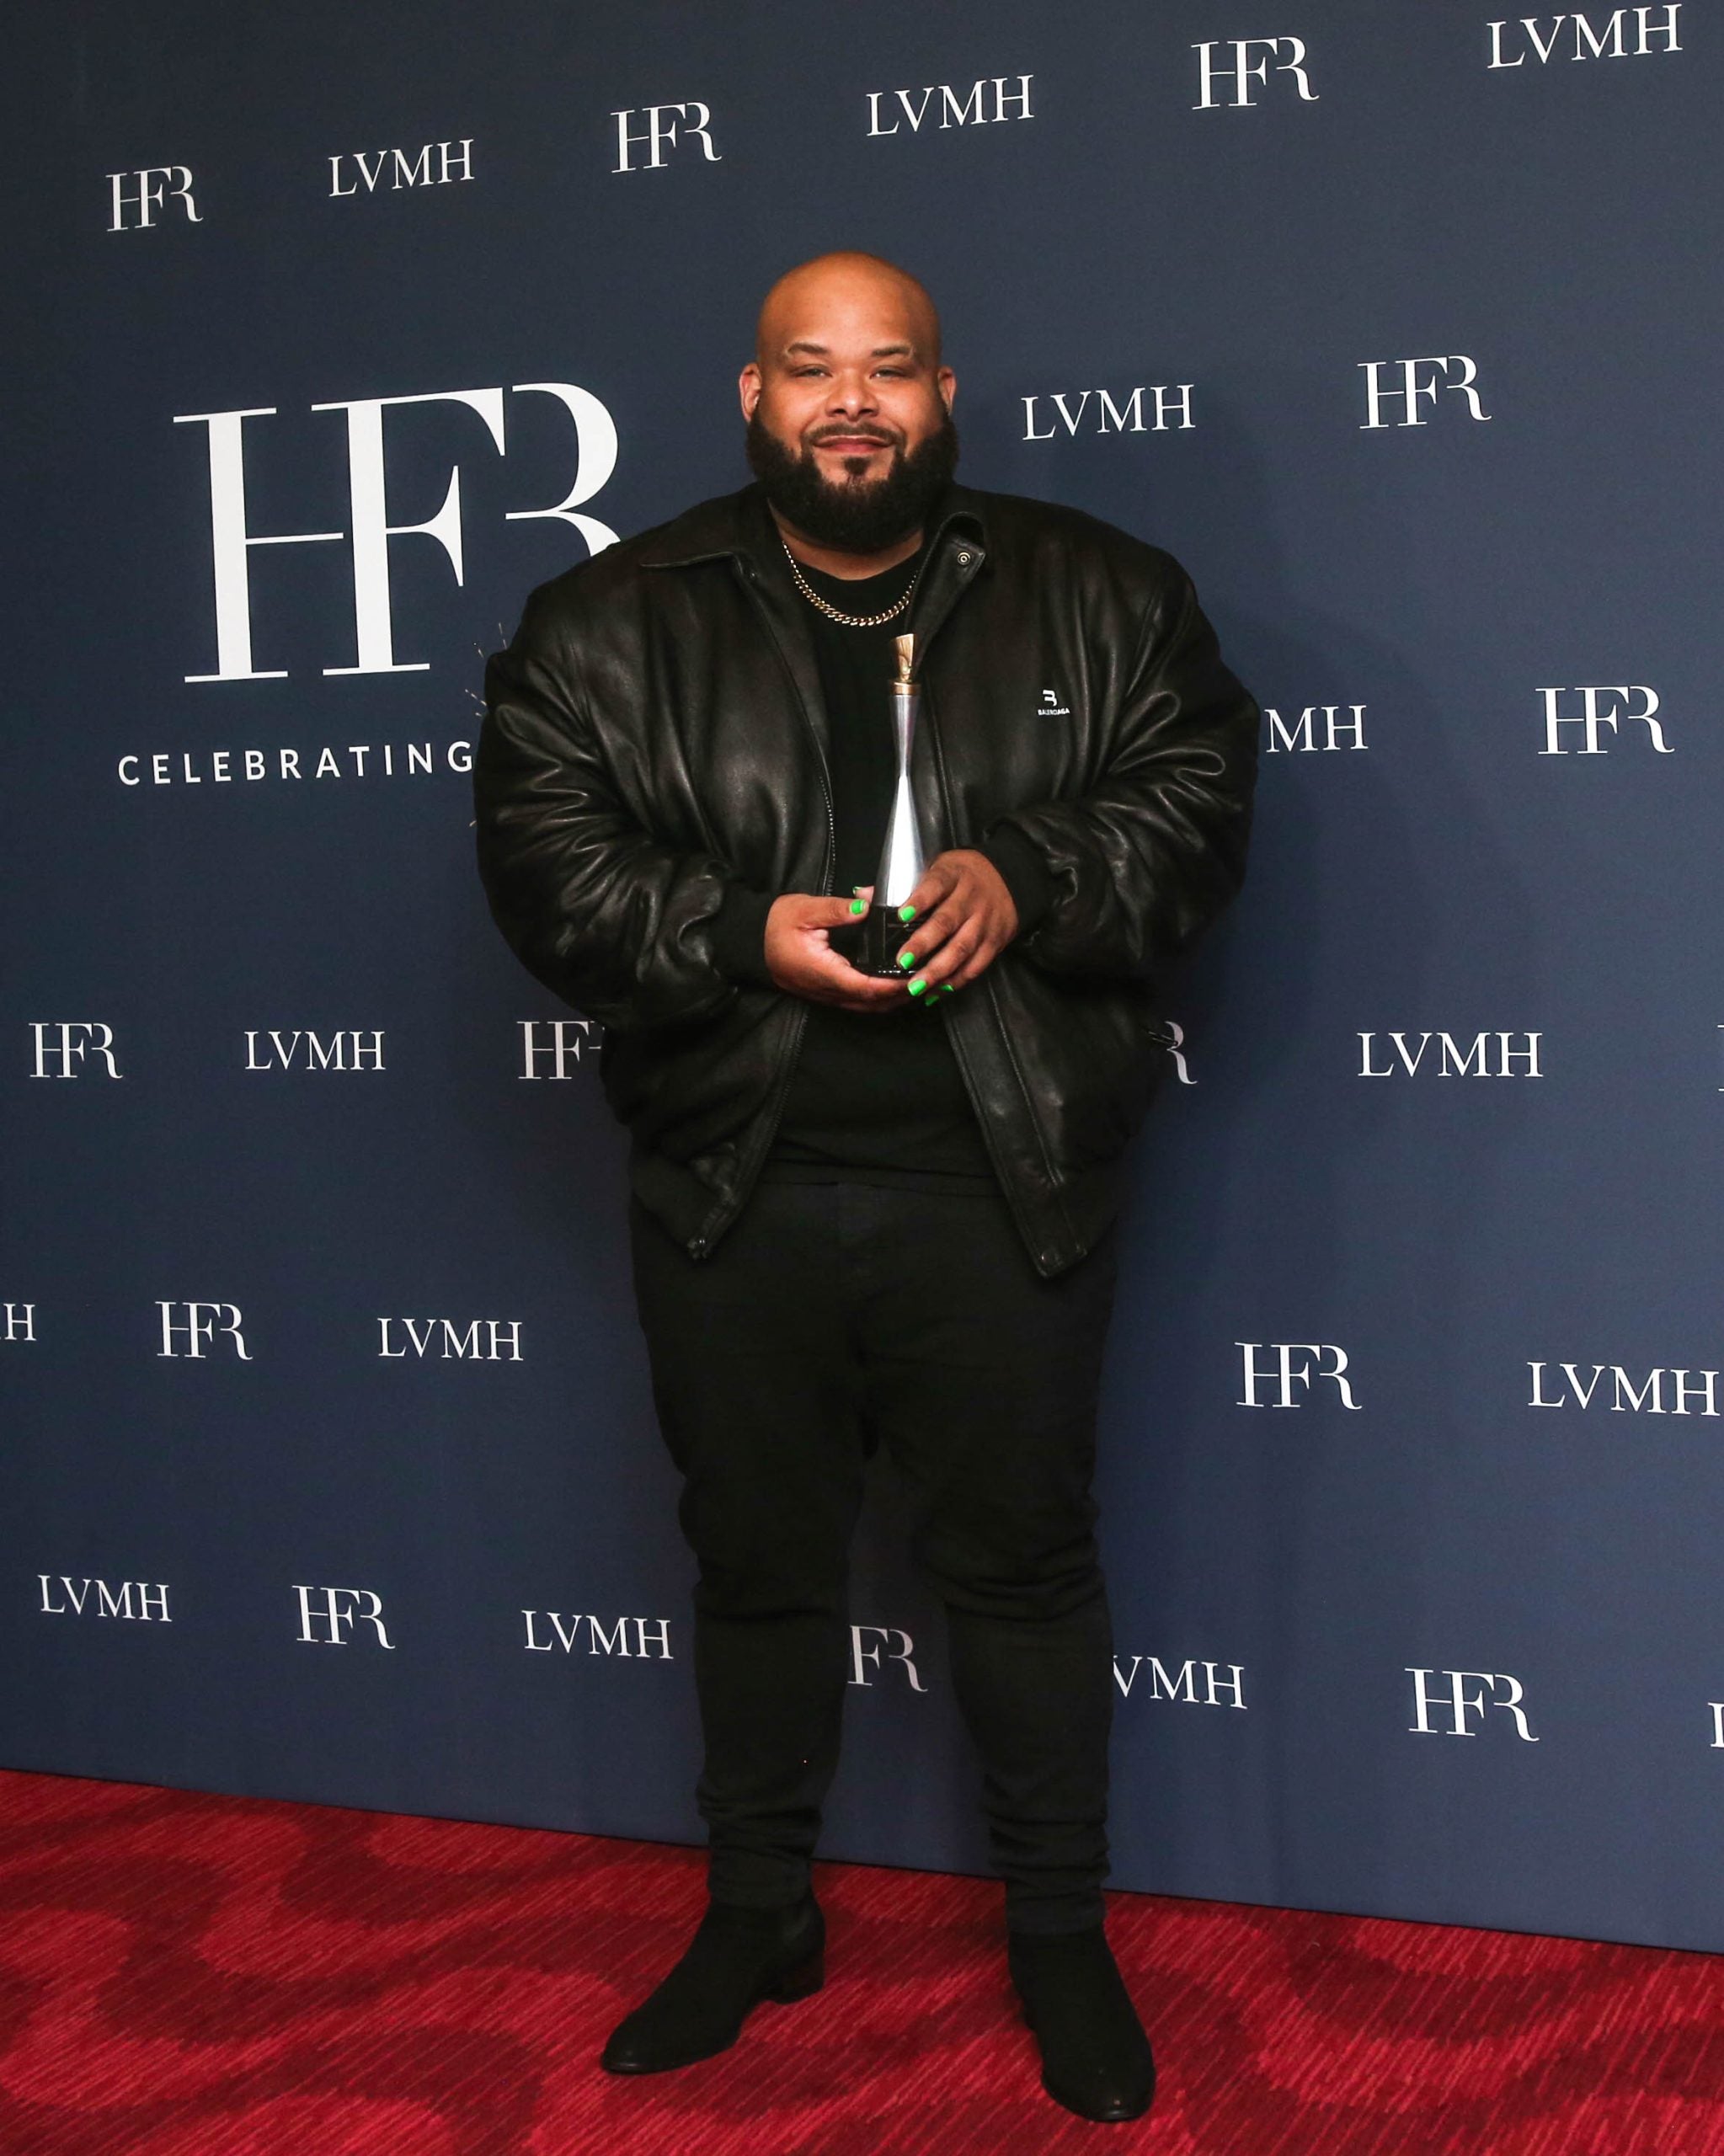 Harlem's Fashion Row Celebrates 15 Years with LVMH